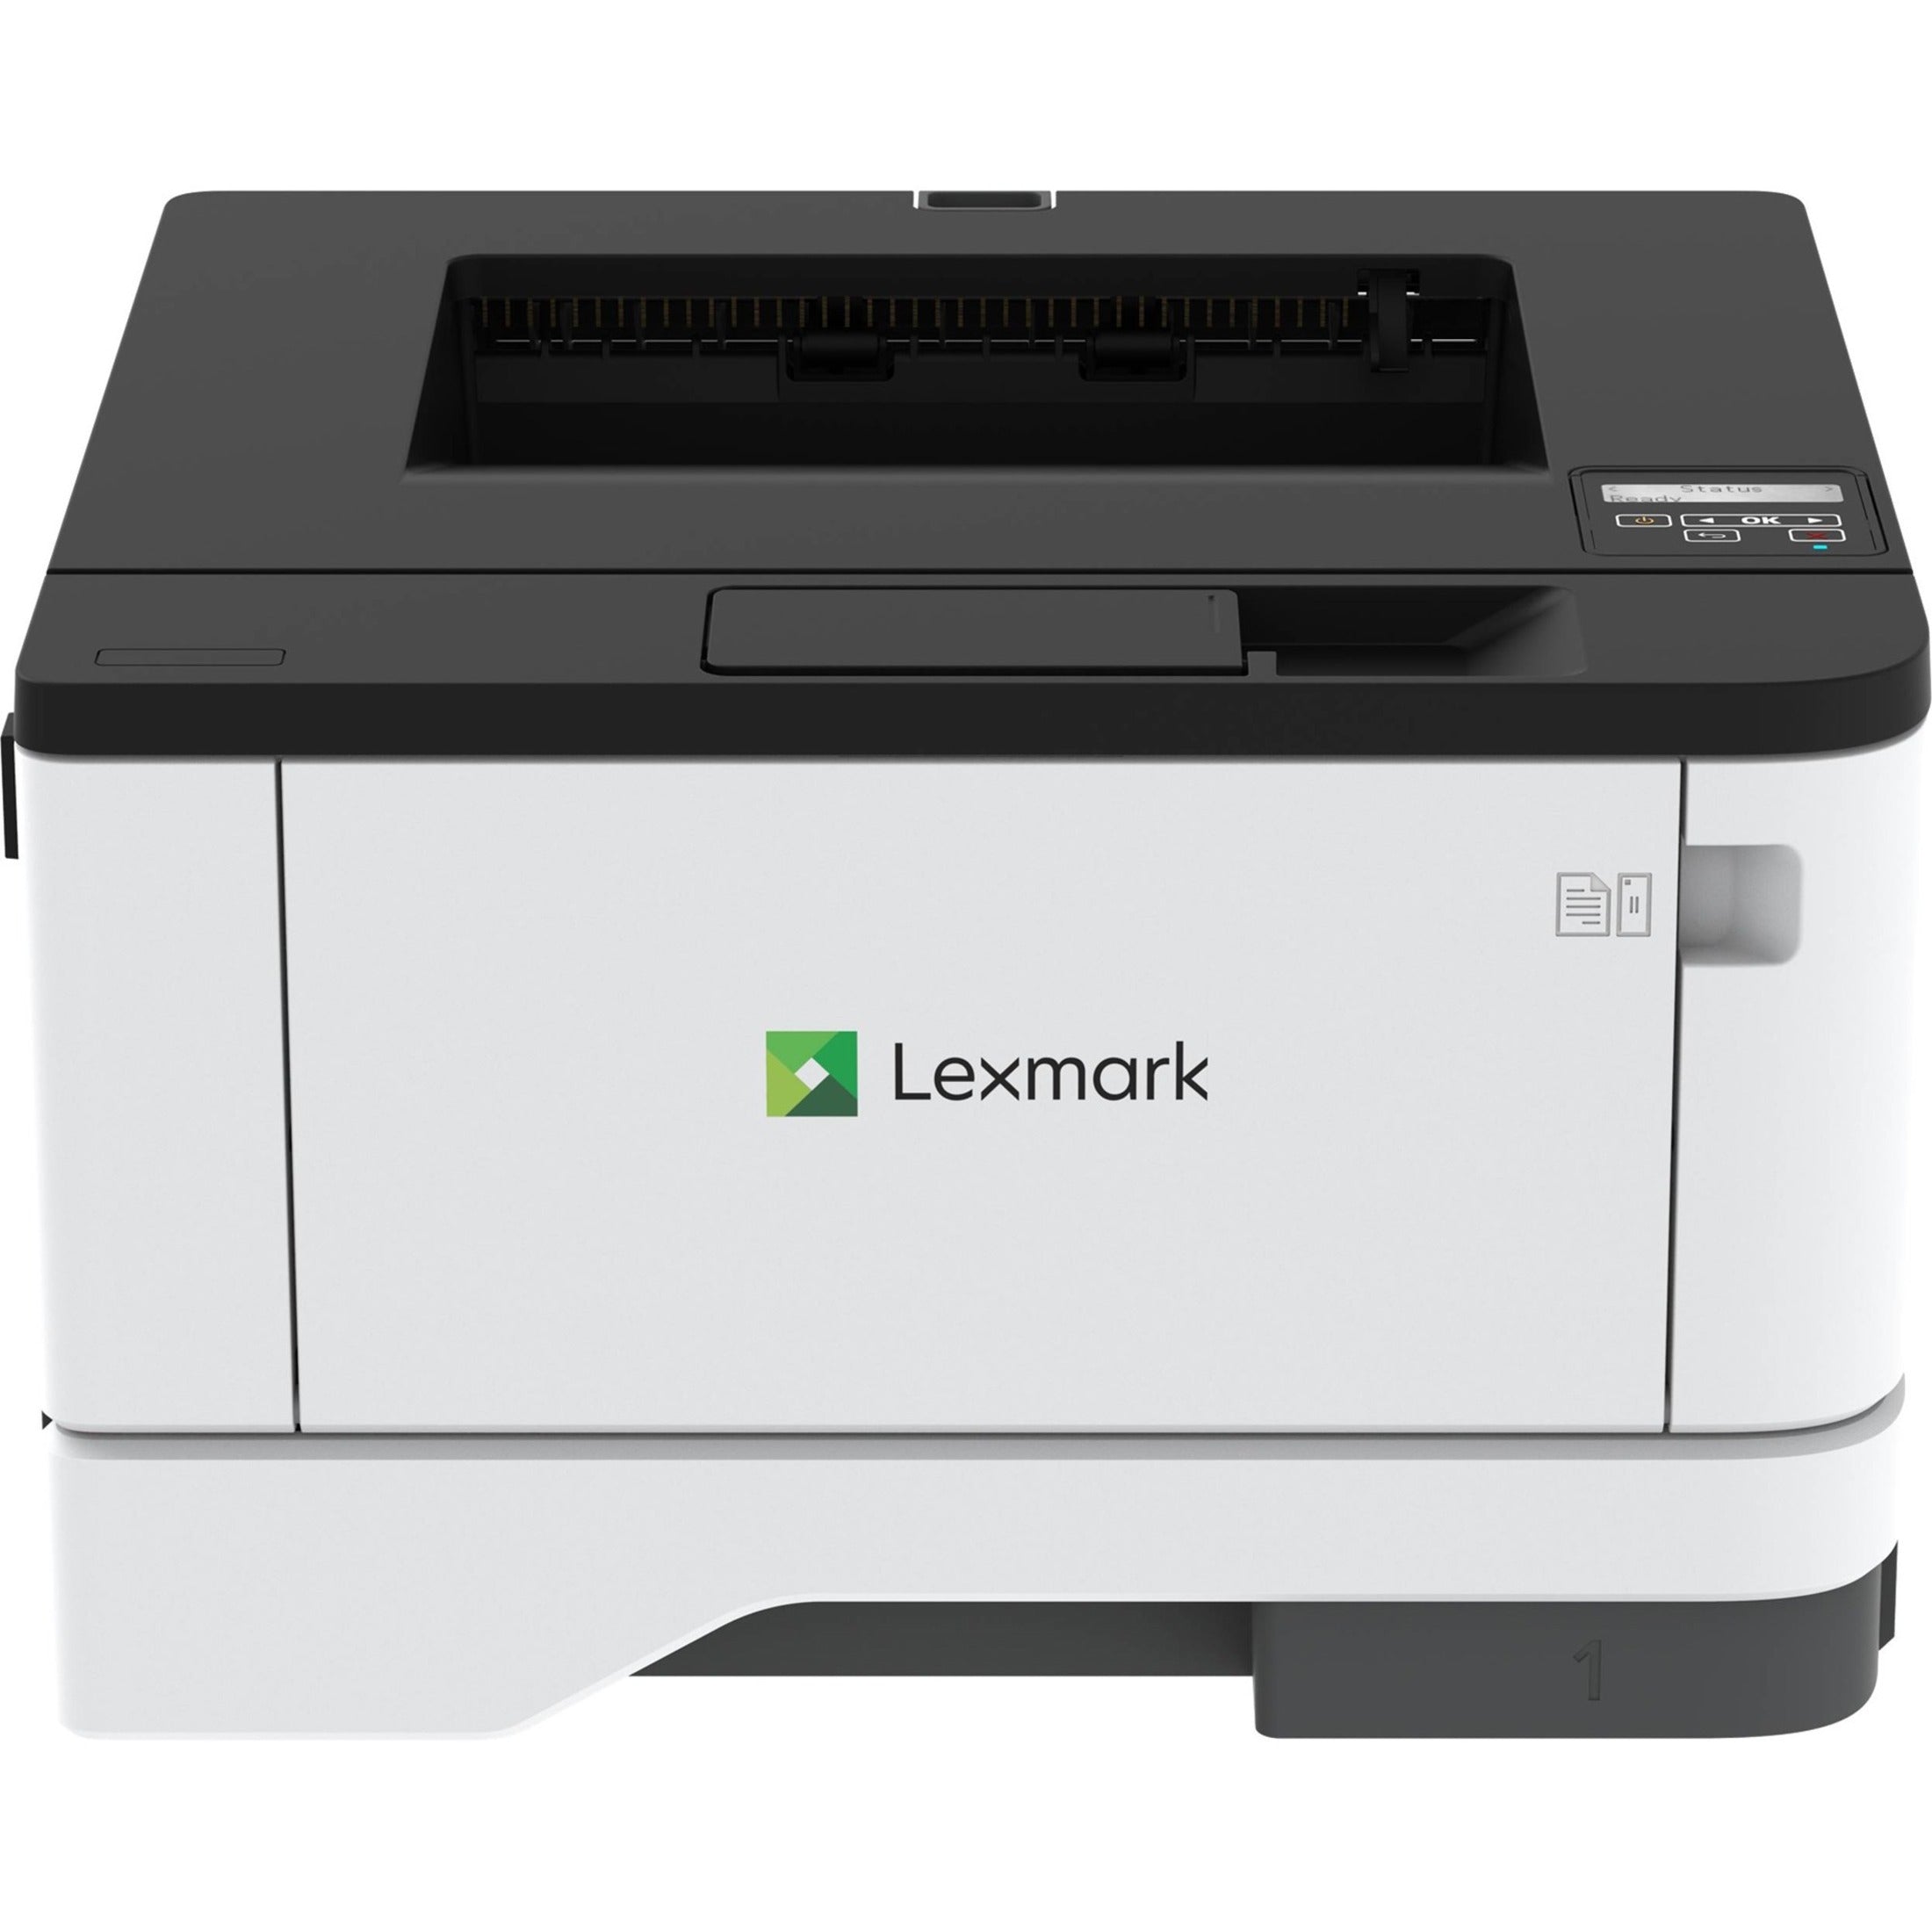 Lexmark 29ST003 MS431DN Laser Printer, Monochrome, Automatic Duplex Printing, 42 ppm, 600 x 600 dpi